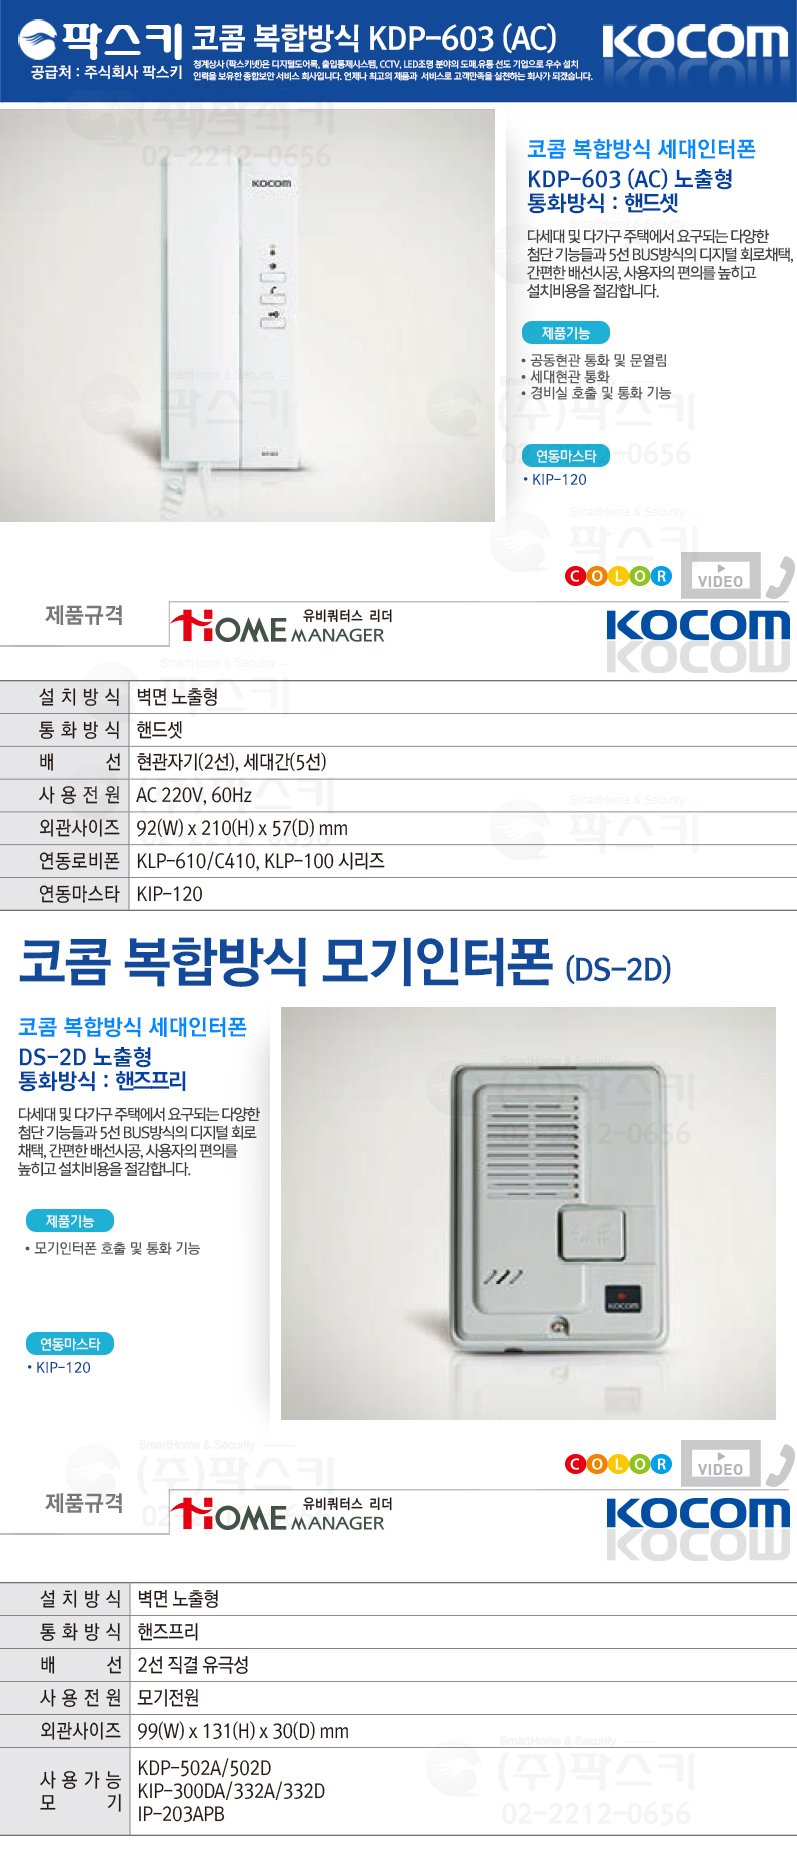 kocom_kdp-603ac_and_ds2d_detail_223556.jpg